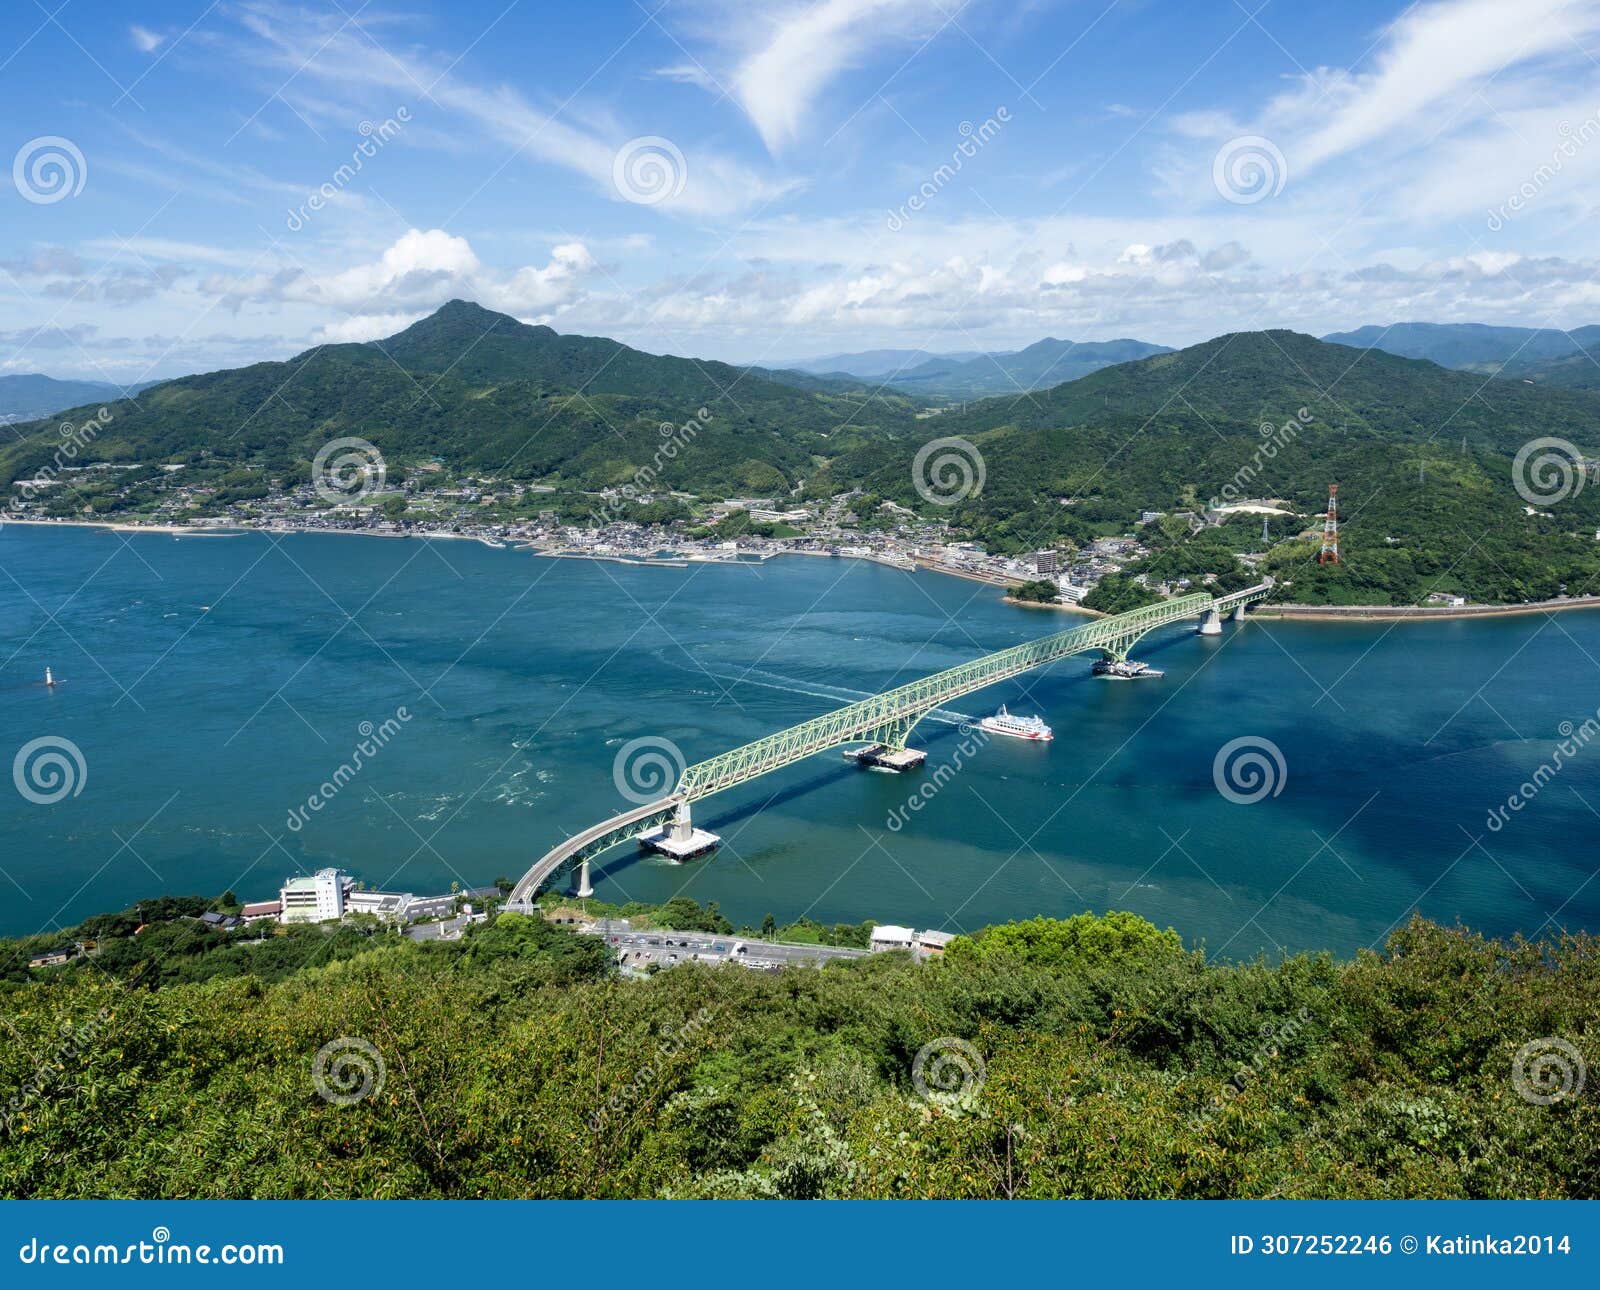 scenic view of obatakeset strait and oshima bridge from iinoyama viewpoint on suo-oshima island